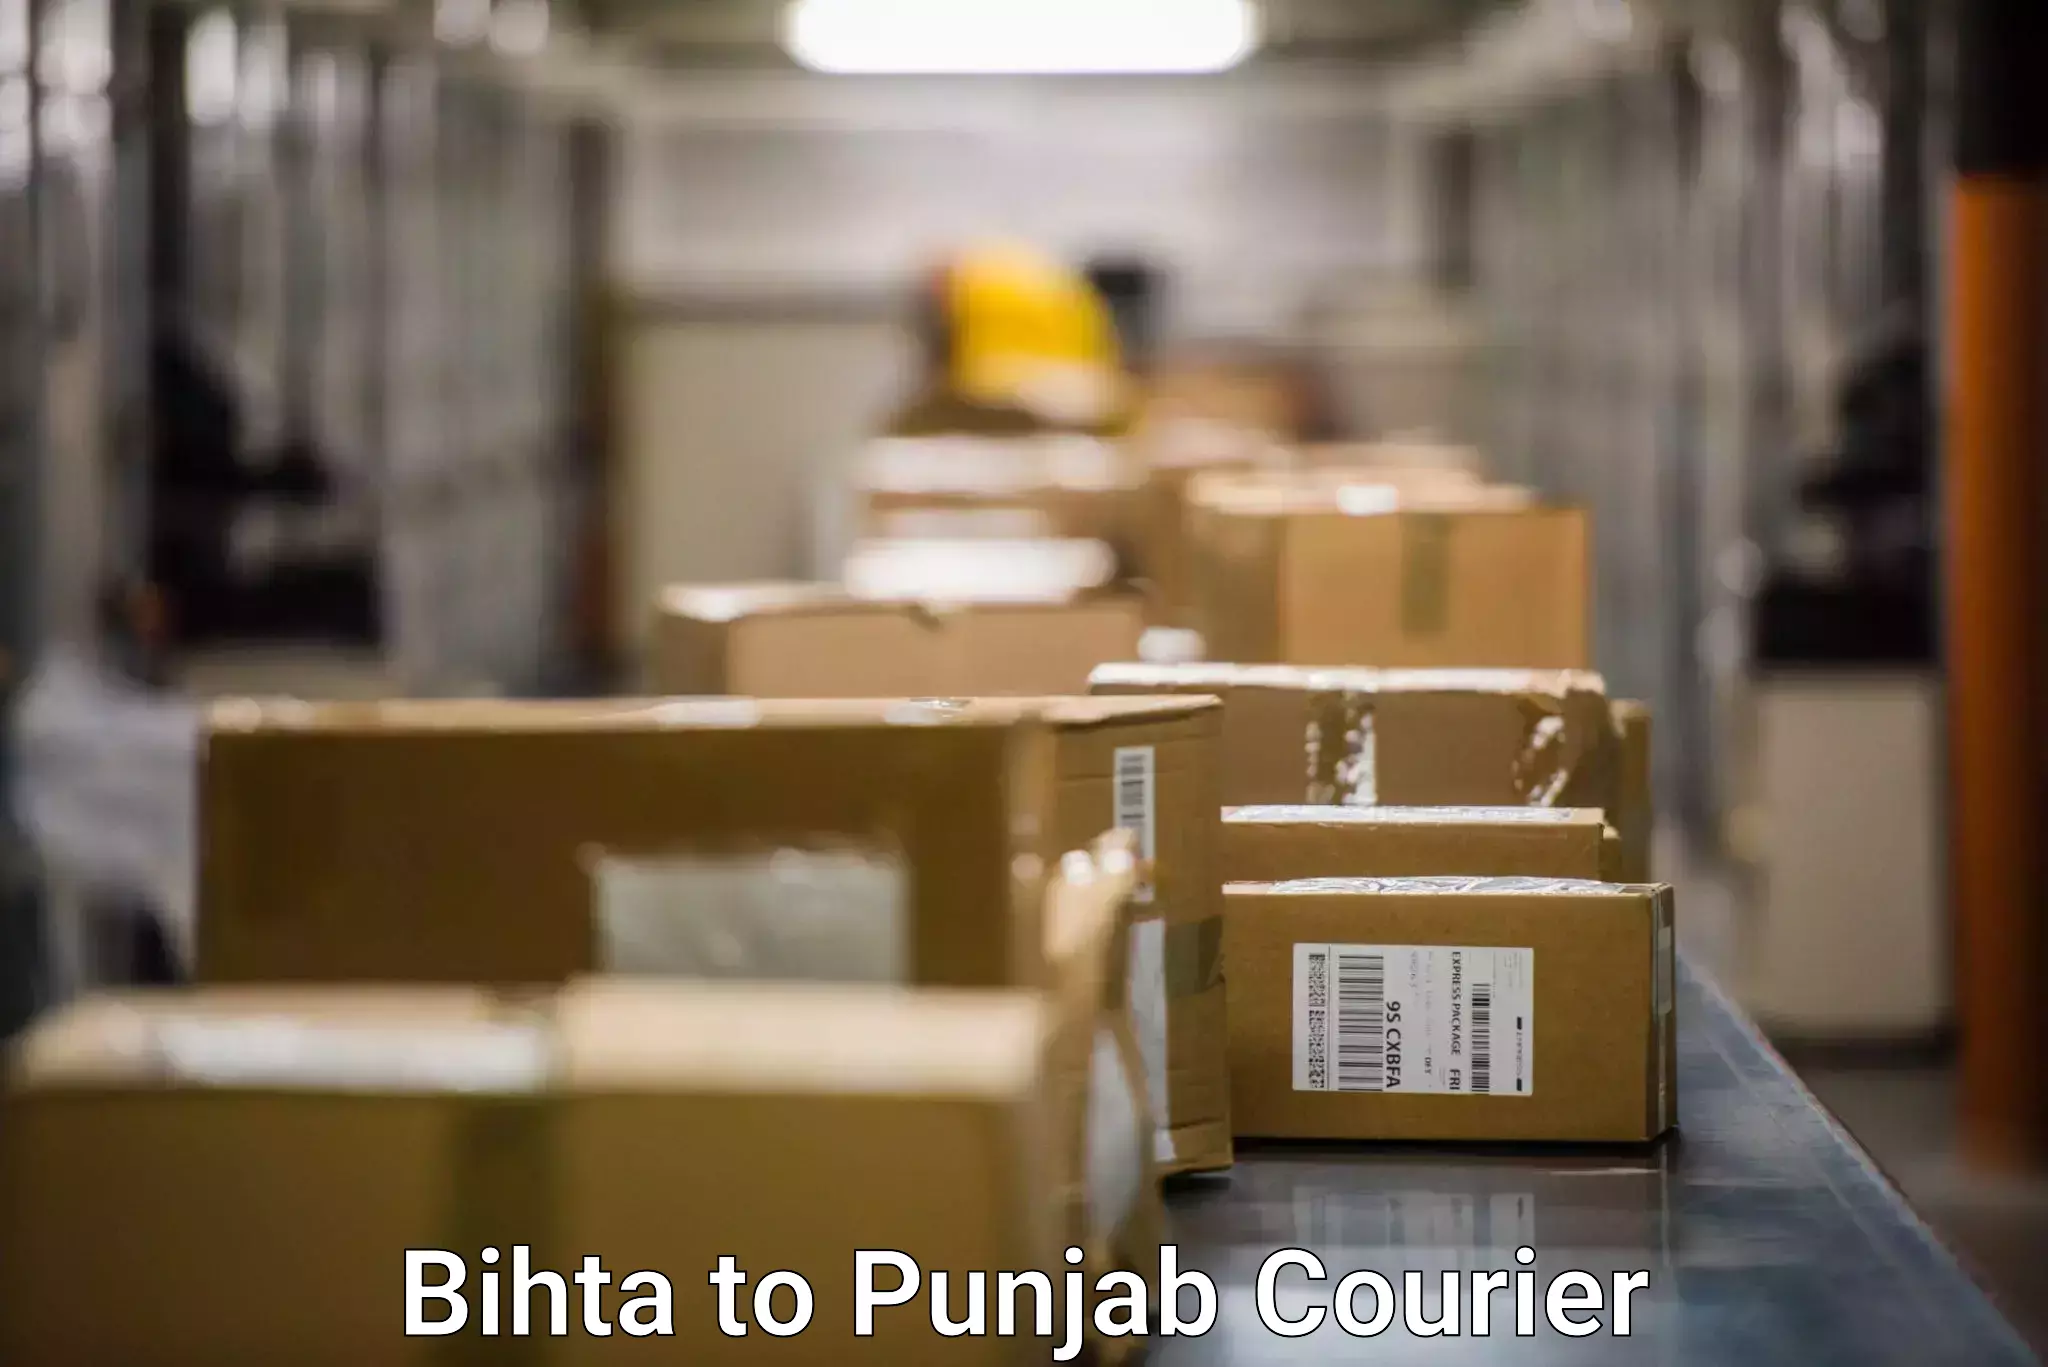 Courier service partnerships in Bihta to Samana